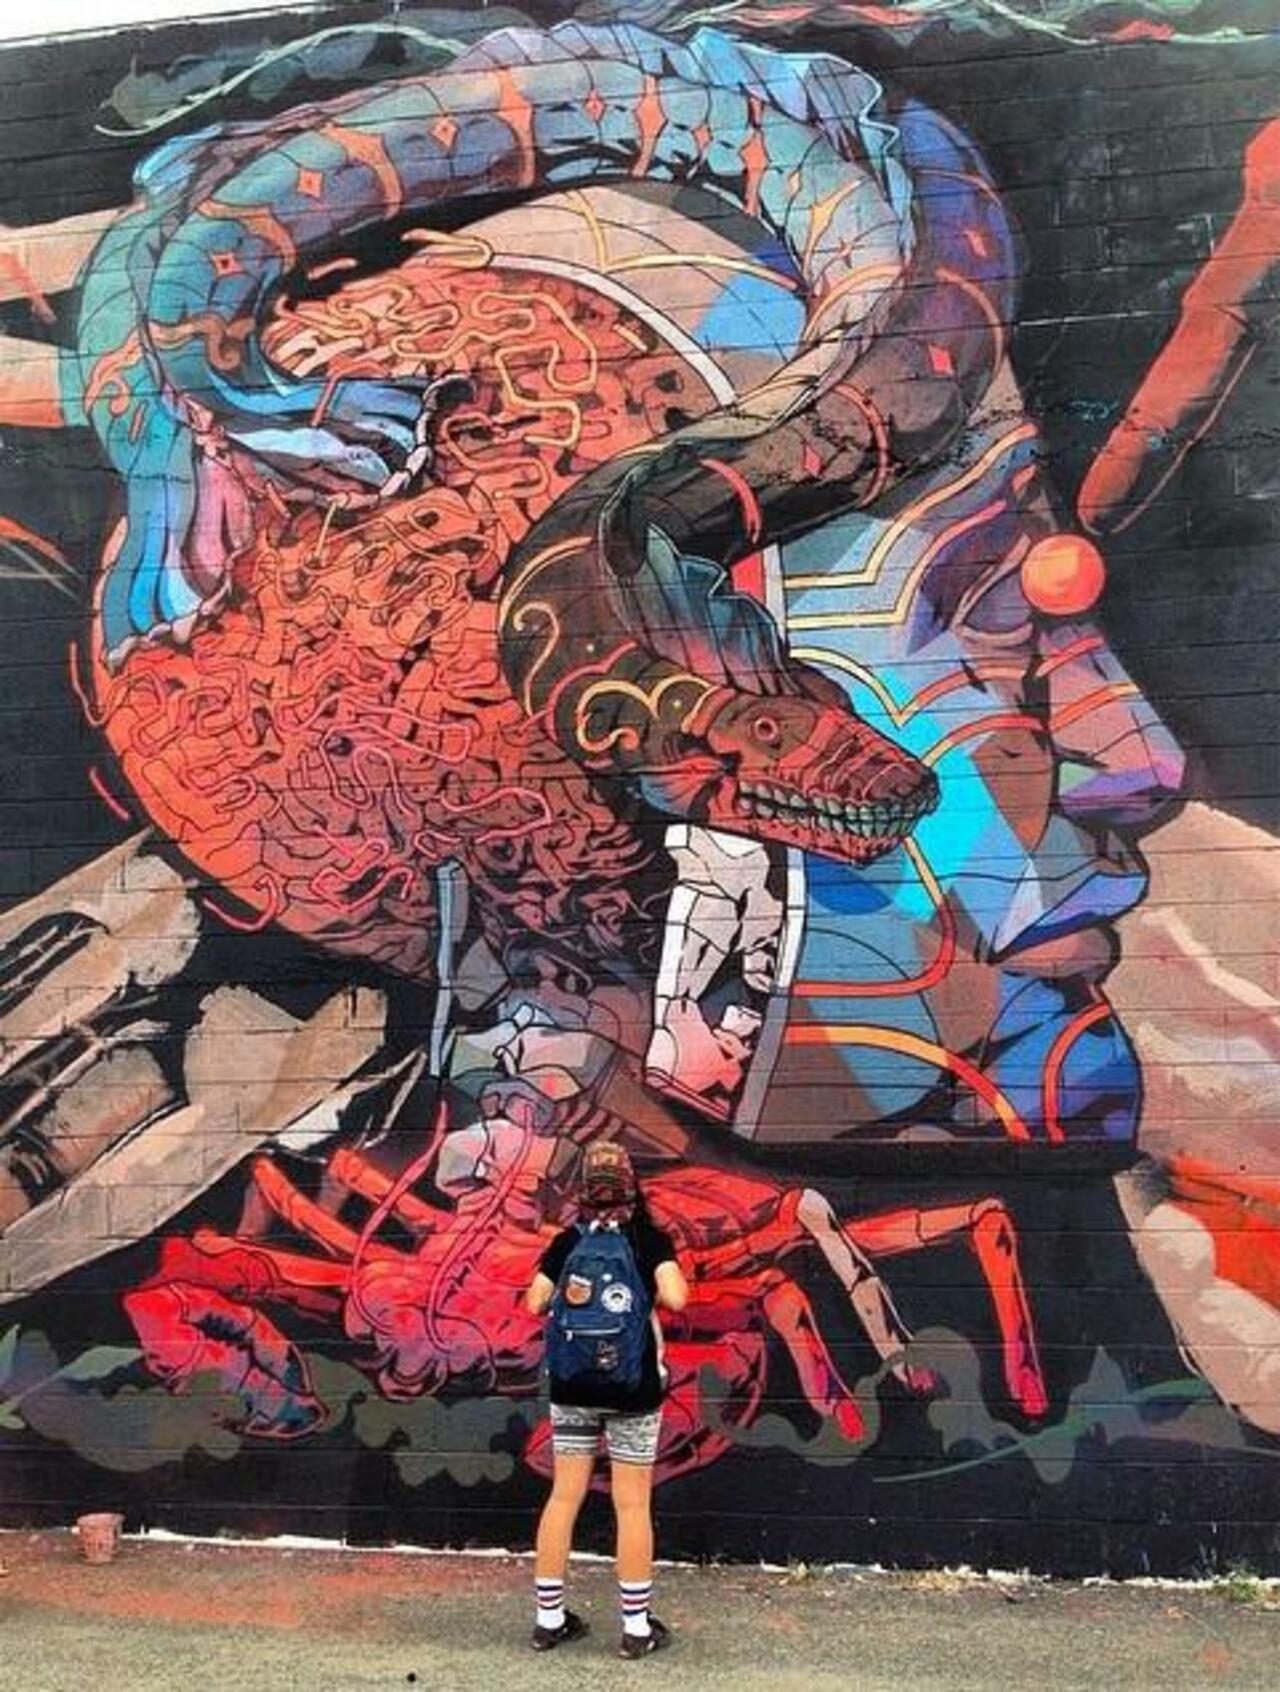 Mind boggling Street Art by Case McClaim & Smithe One in Hawaii. 

#art #arte #graffiti #streetart http://t.co/3hfP3rzLvJ From: GoogleStr…